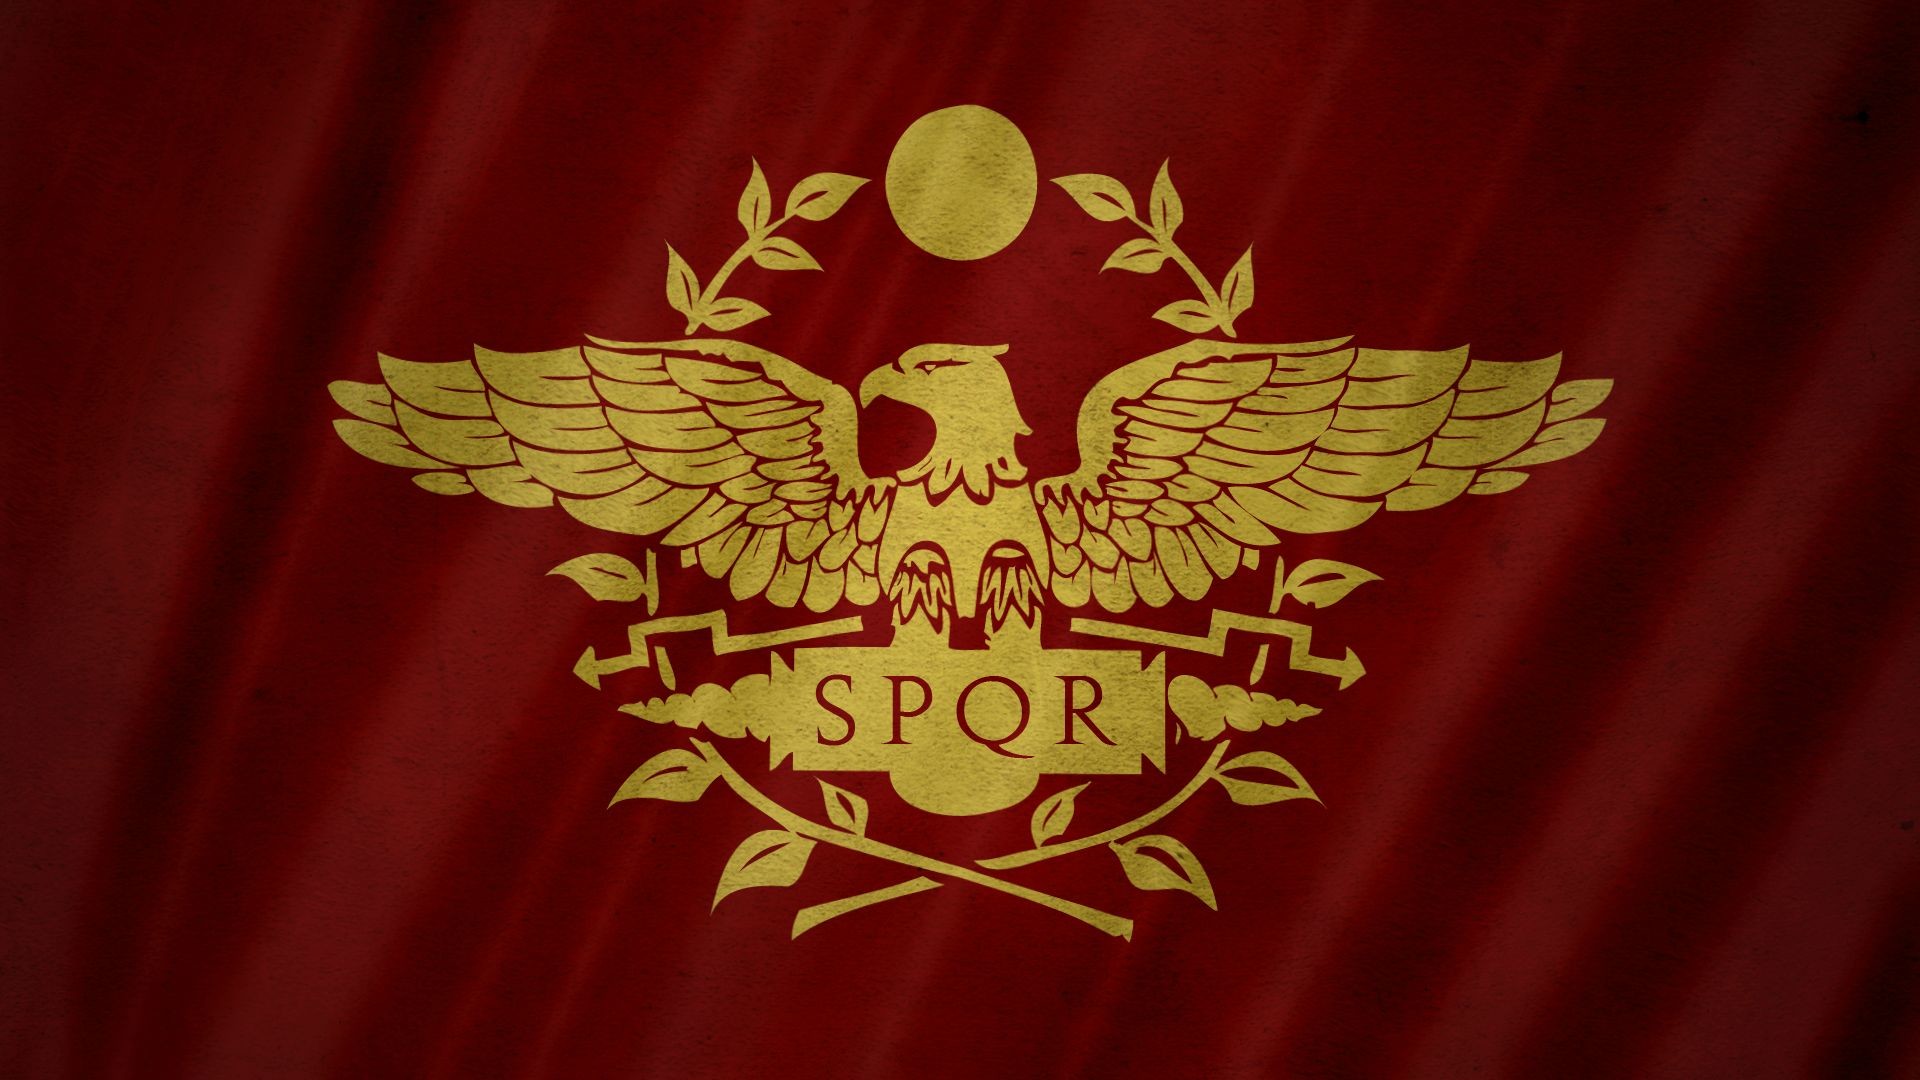 holy roman empire wallpaper